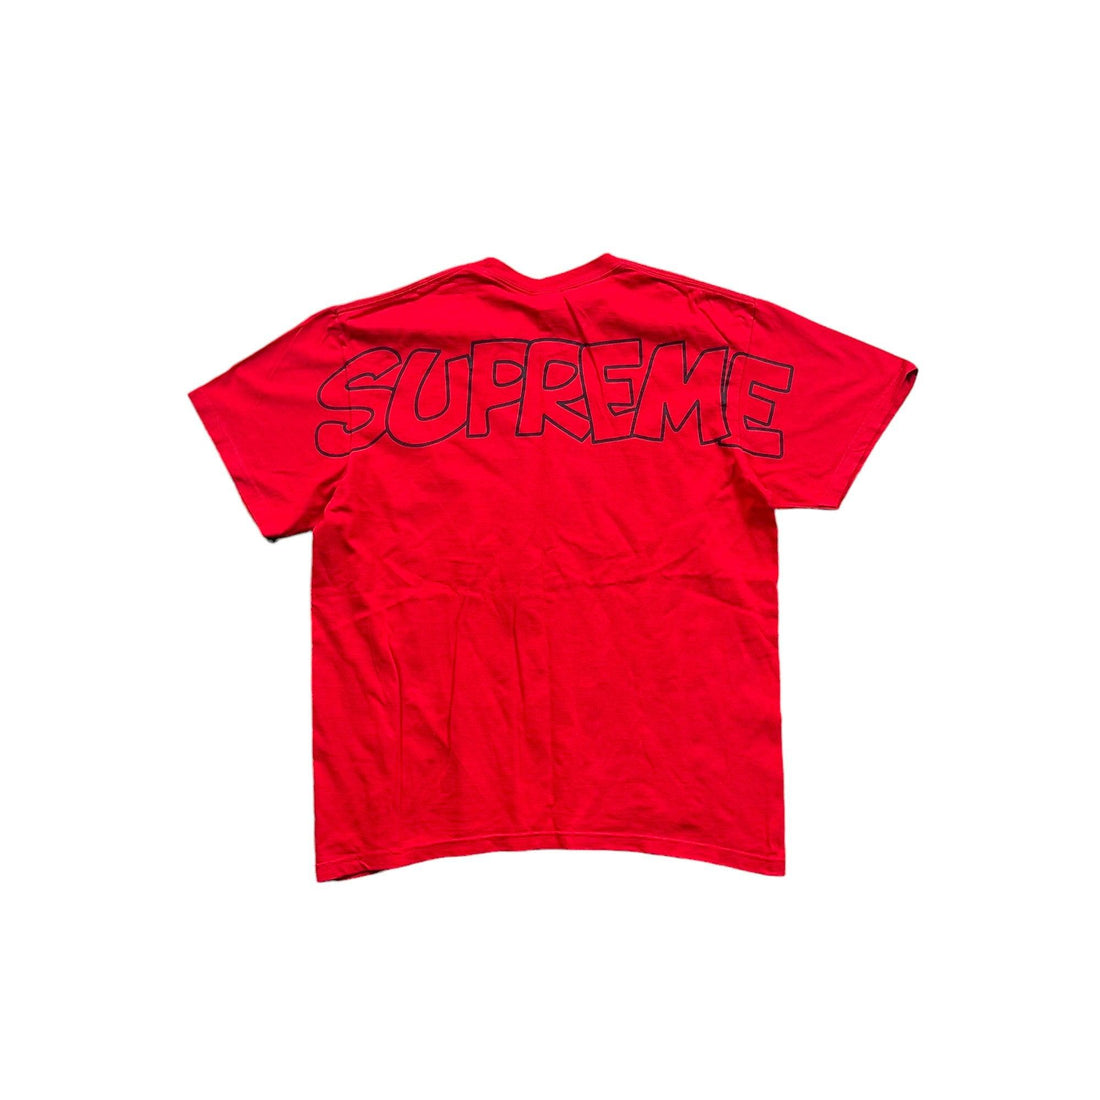 Red Supreme x Smurfs Tee - Medium - The Streetwear Studio